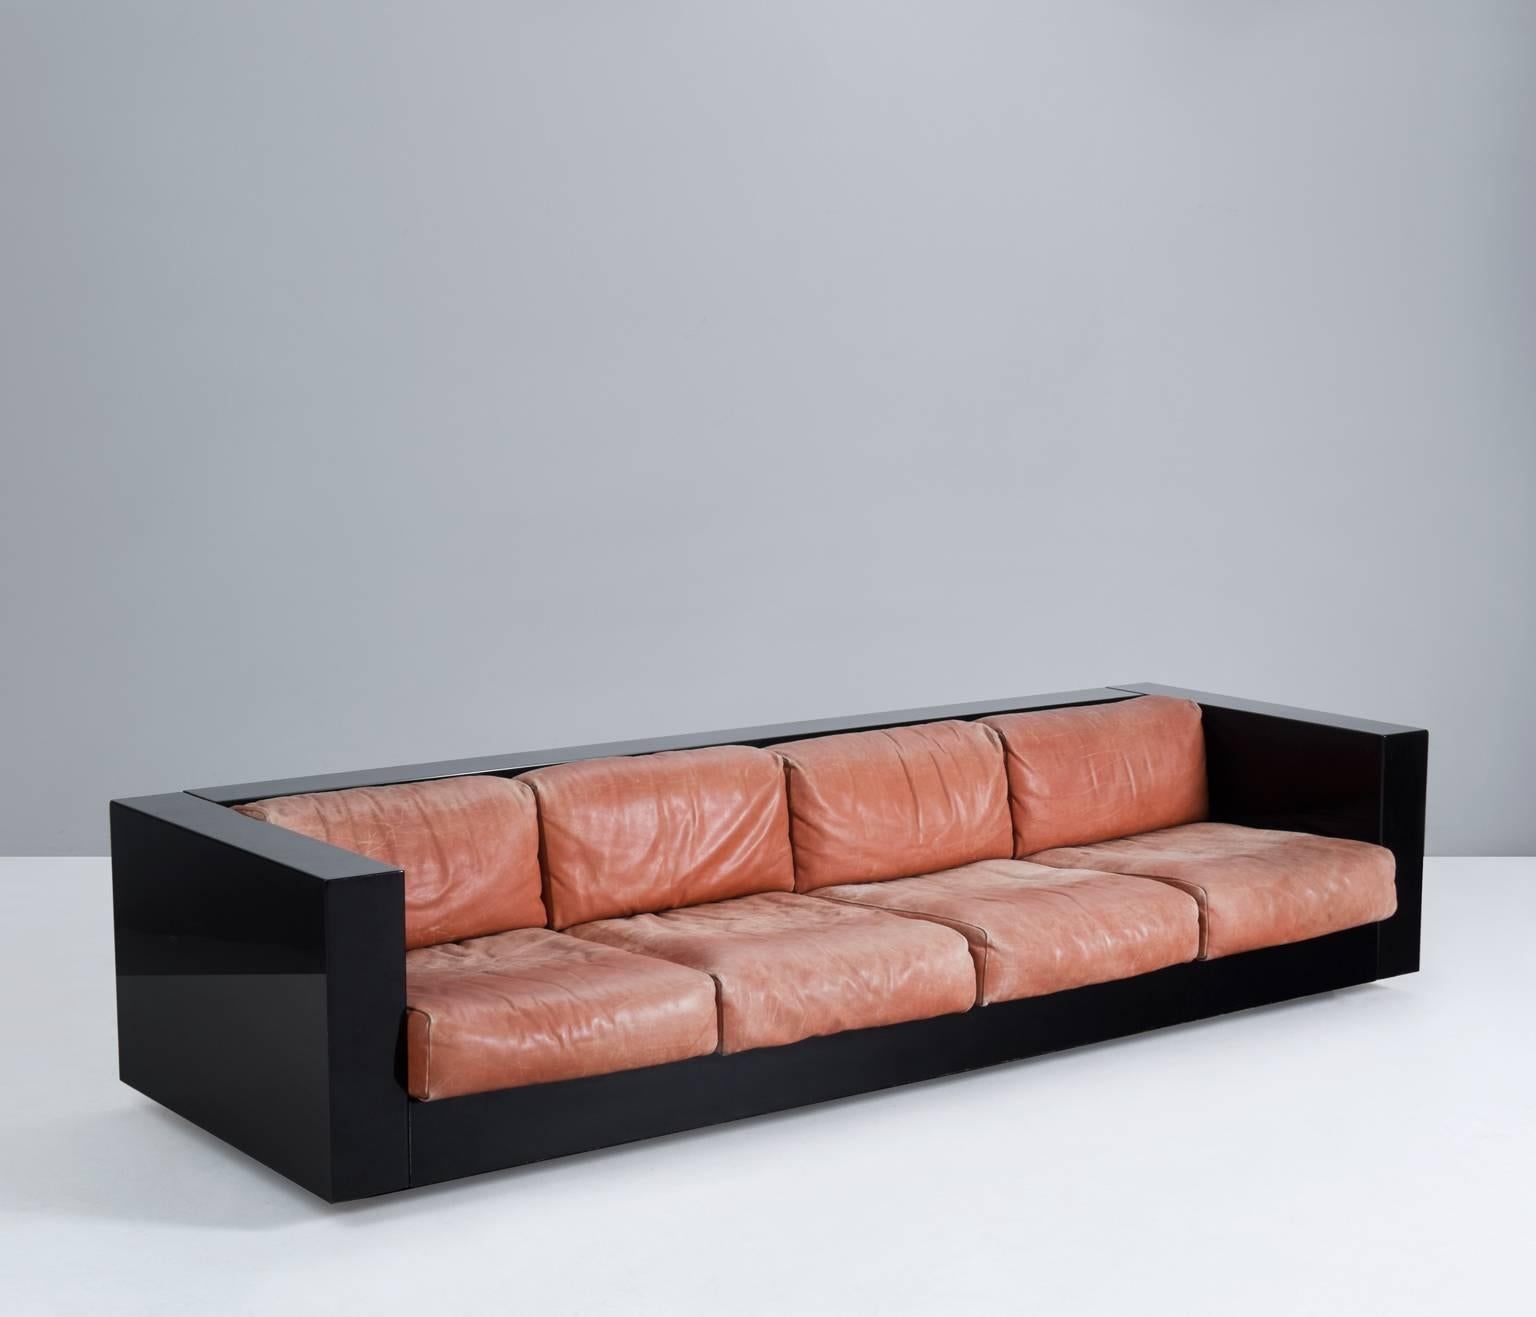 'Sartoga' sofa, in wood and leather, by Lella & Massimo Vignelli for Poltronova, Italy, 1964. 

Very large four-seat sofa 'Sartoga' by Italian designer couple Lella & Massimo Vignelli. The minimalistic rectangular elements of the body are very